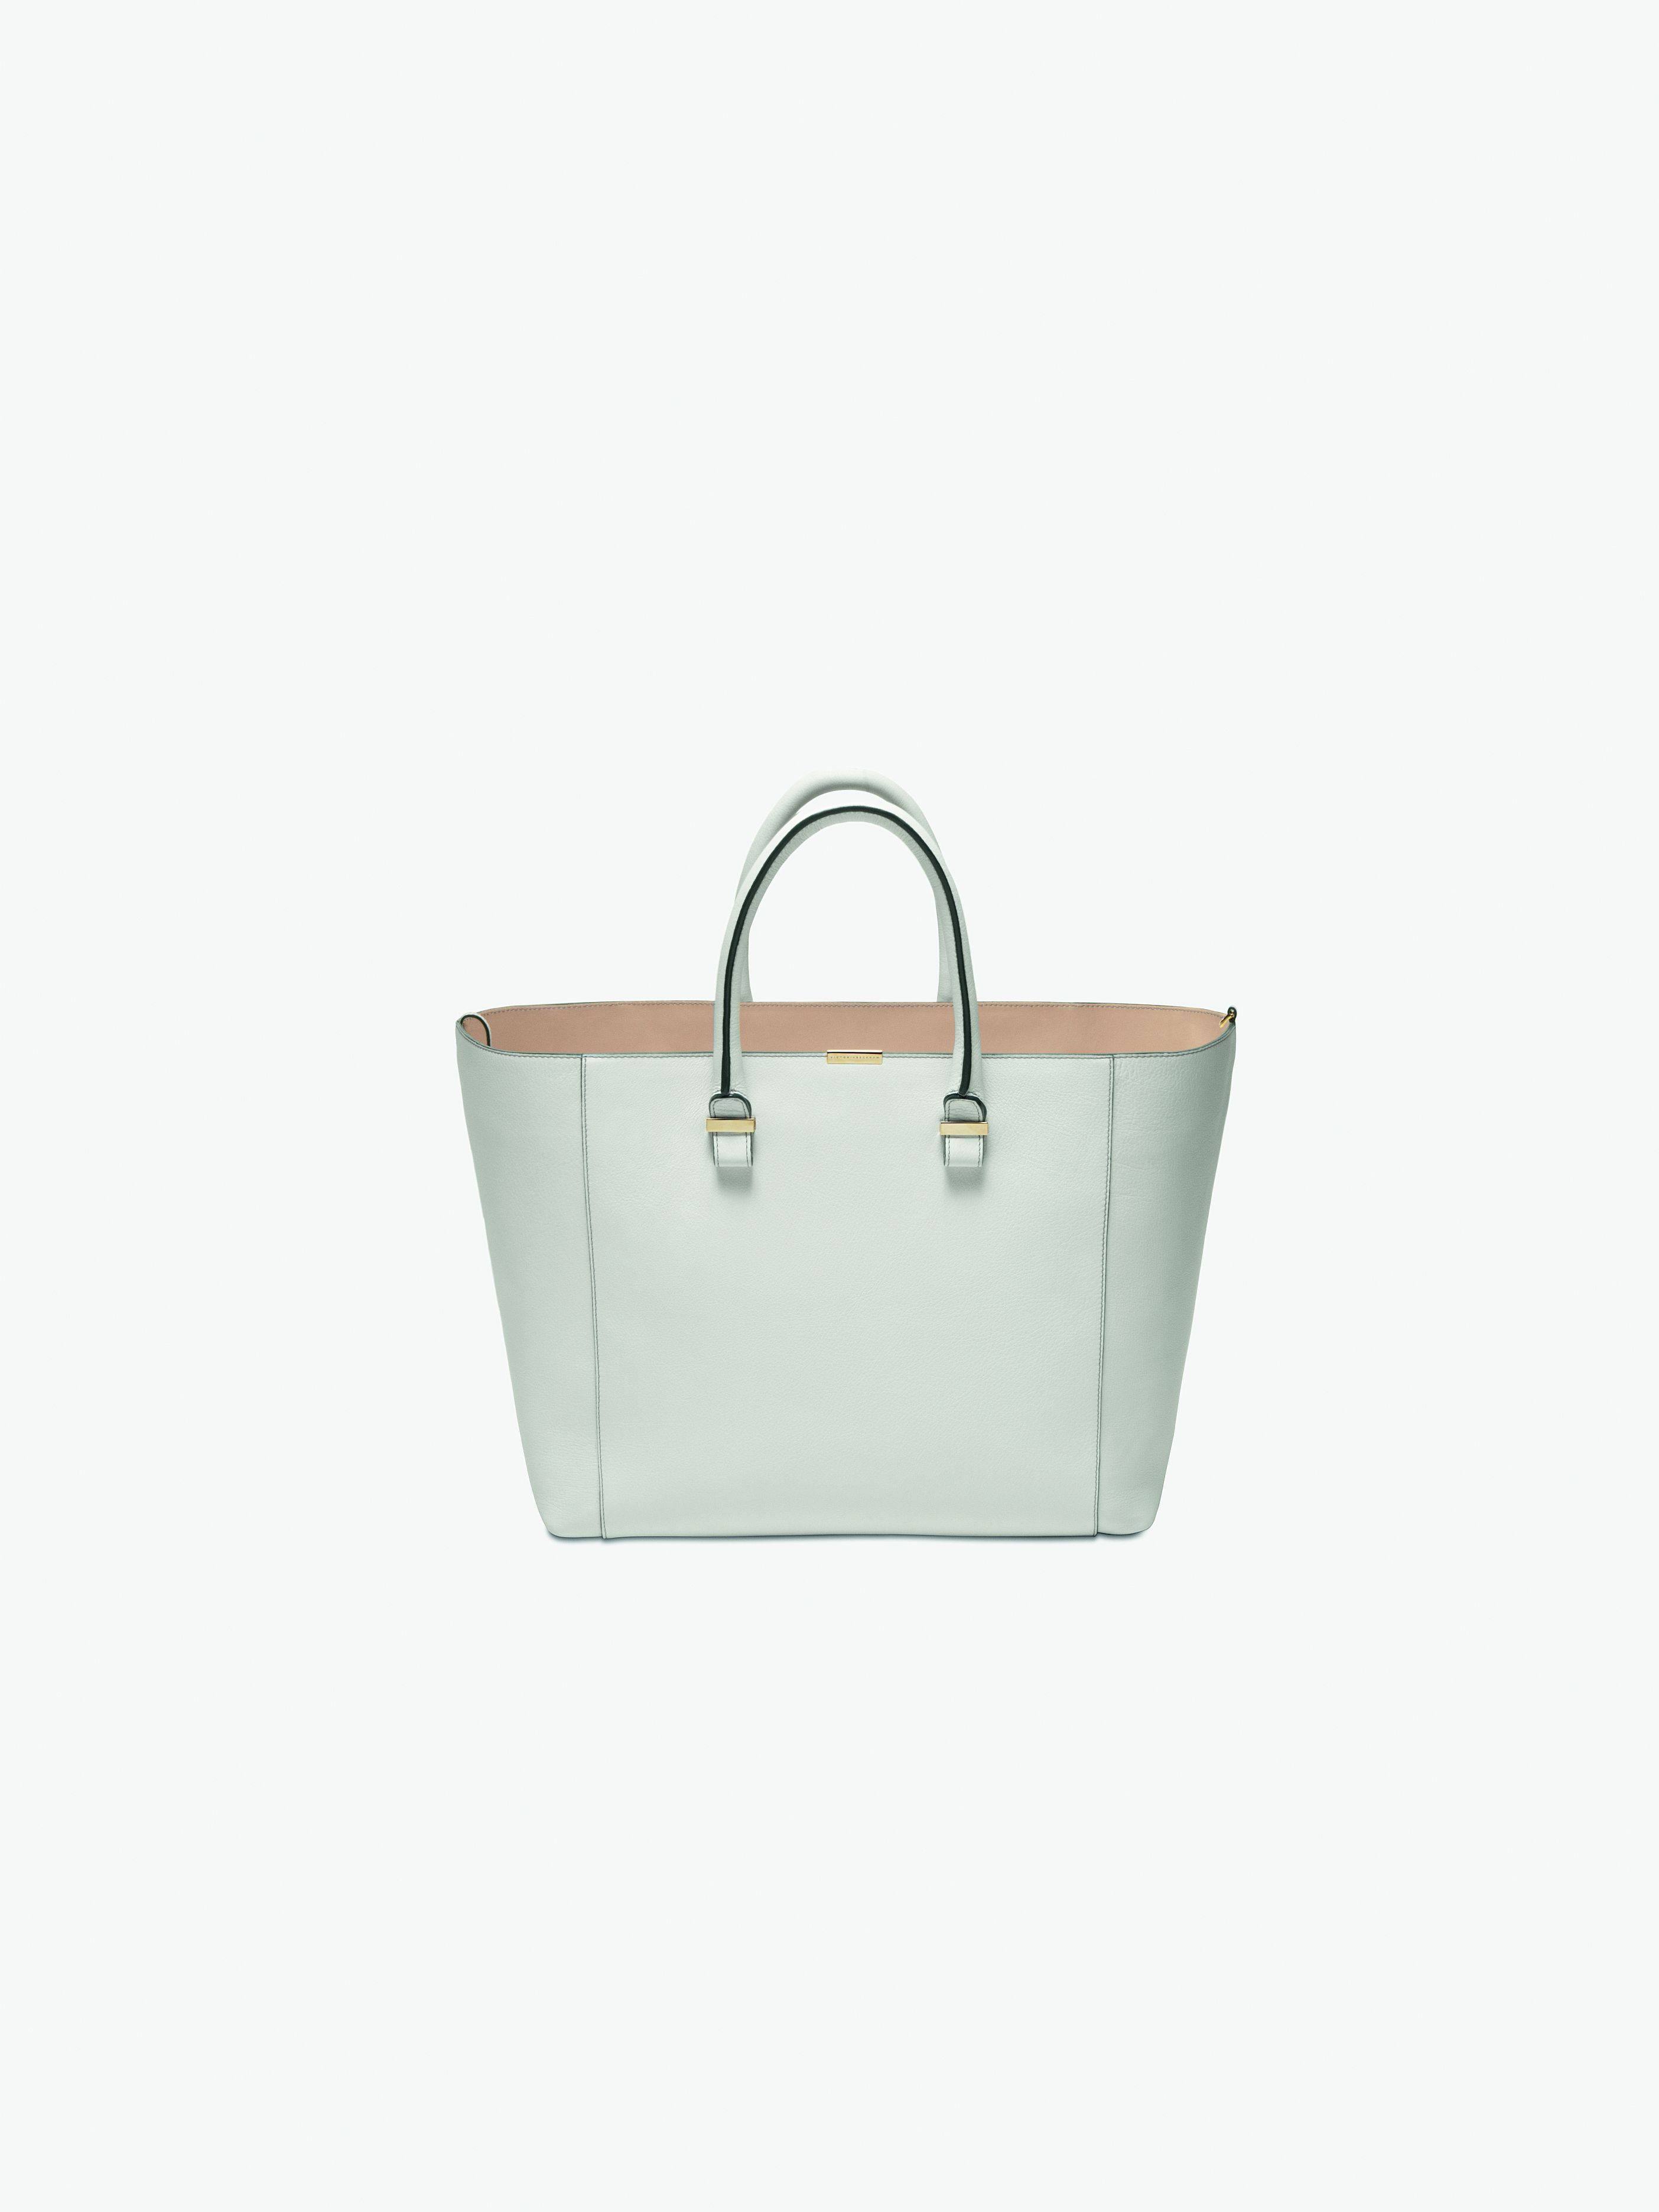 Victoria Beckham SS2014 _white liberty bag